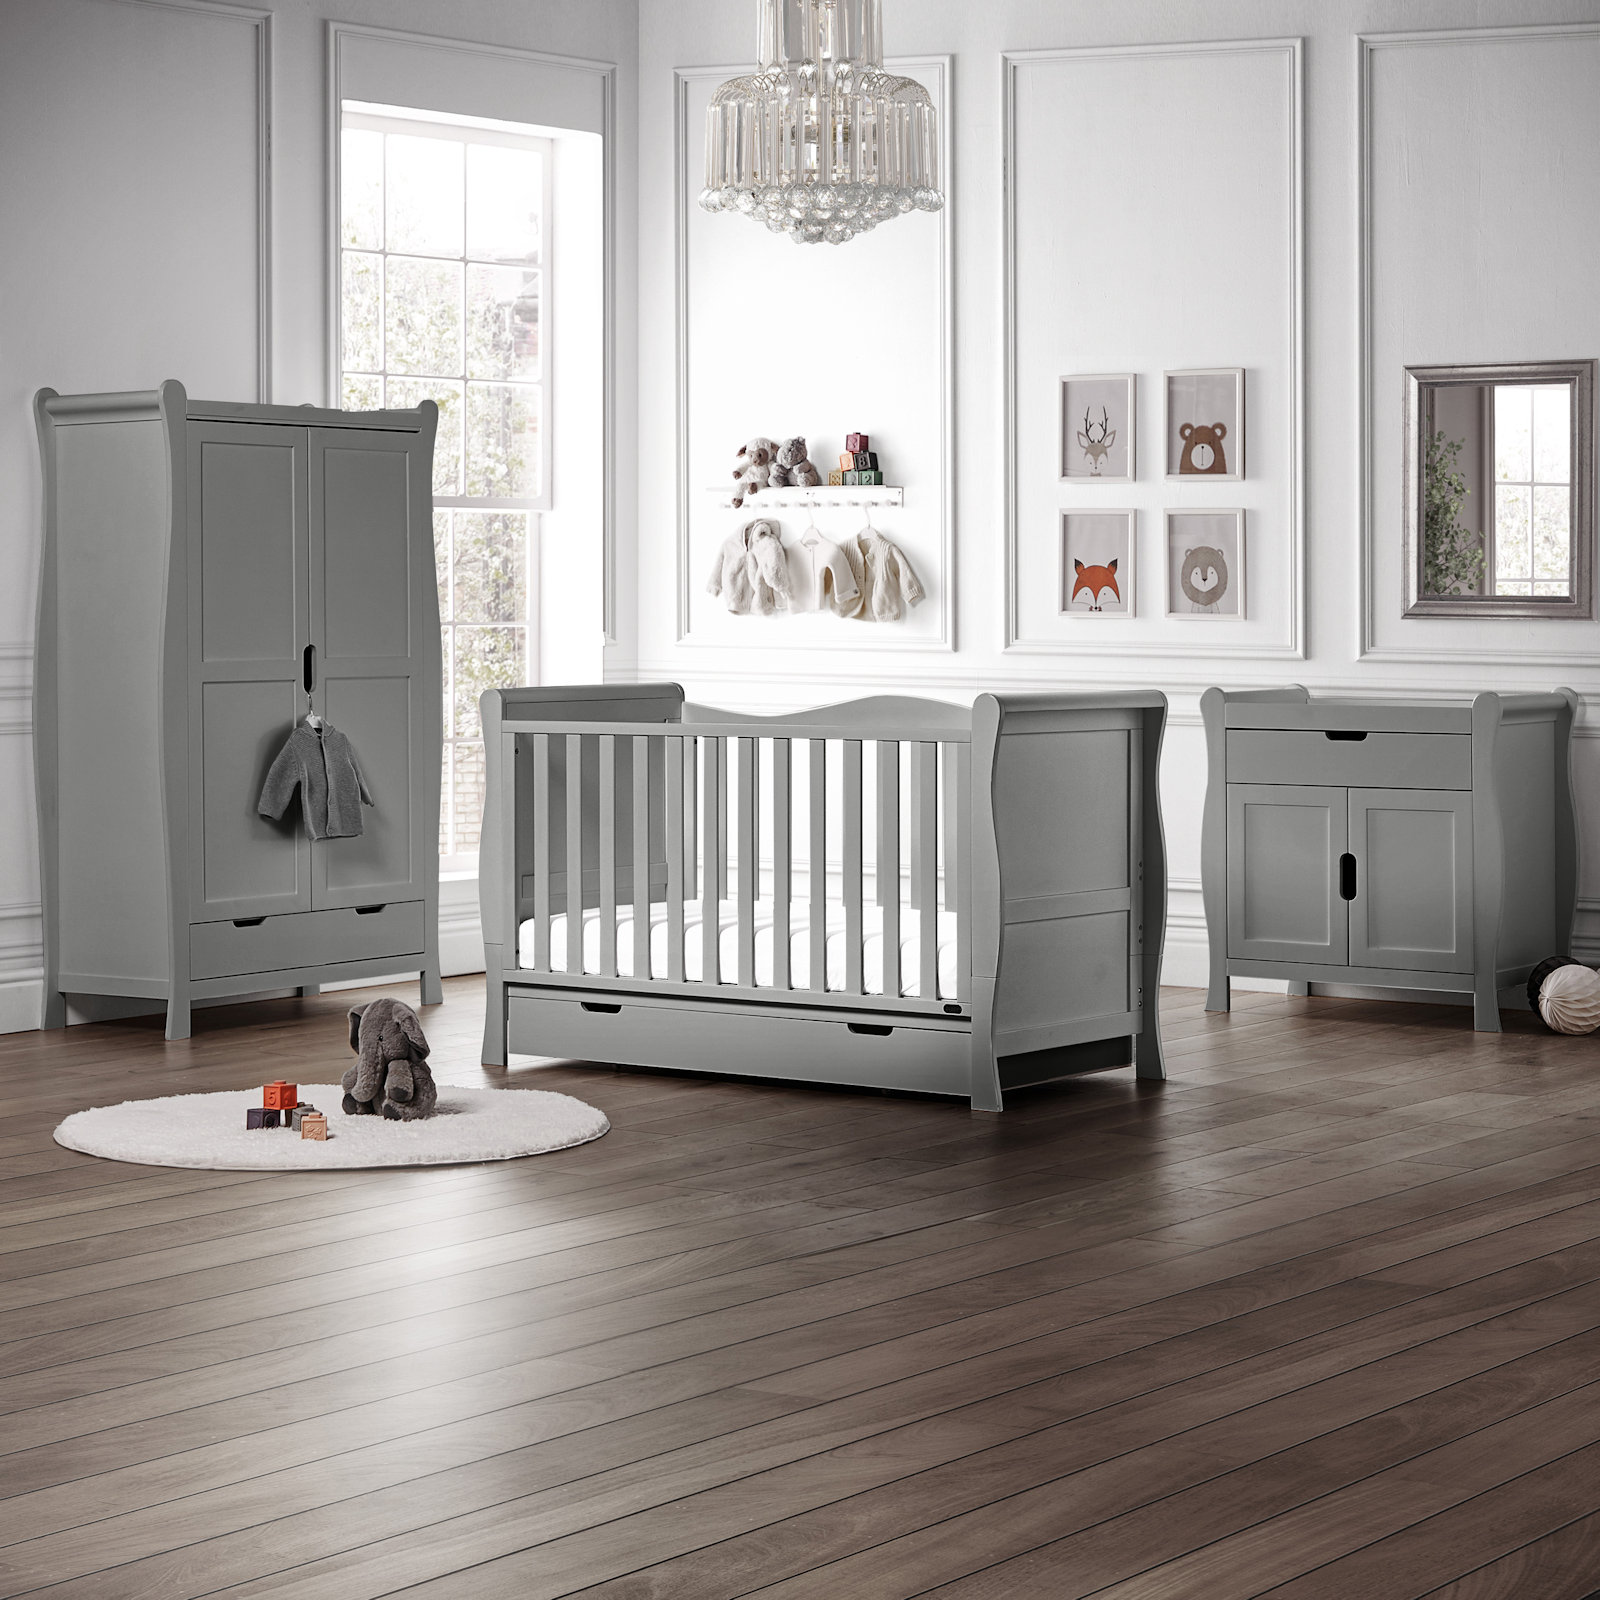 Puggle Prestbury Classic Deluxe Sleigh 6pc Nursery Furniture Set with Drawer & Fibre Mattress - Grey